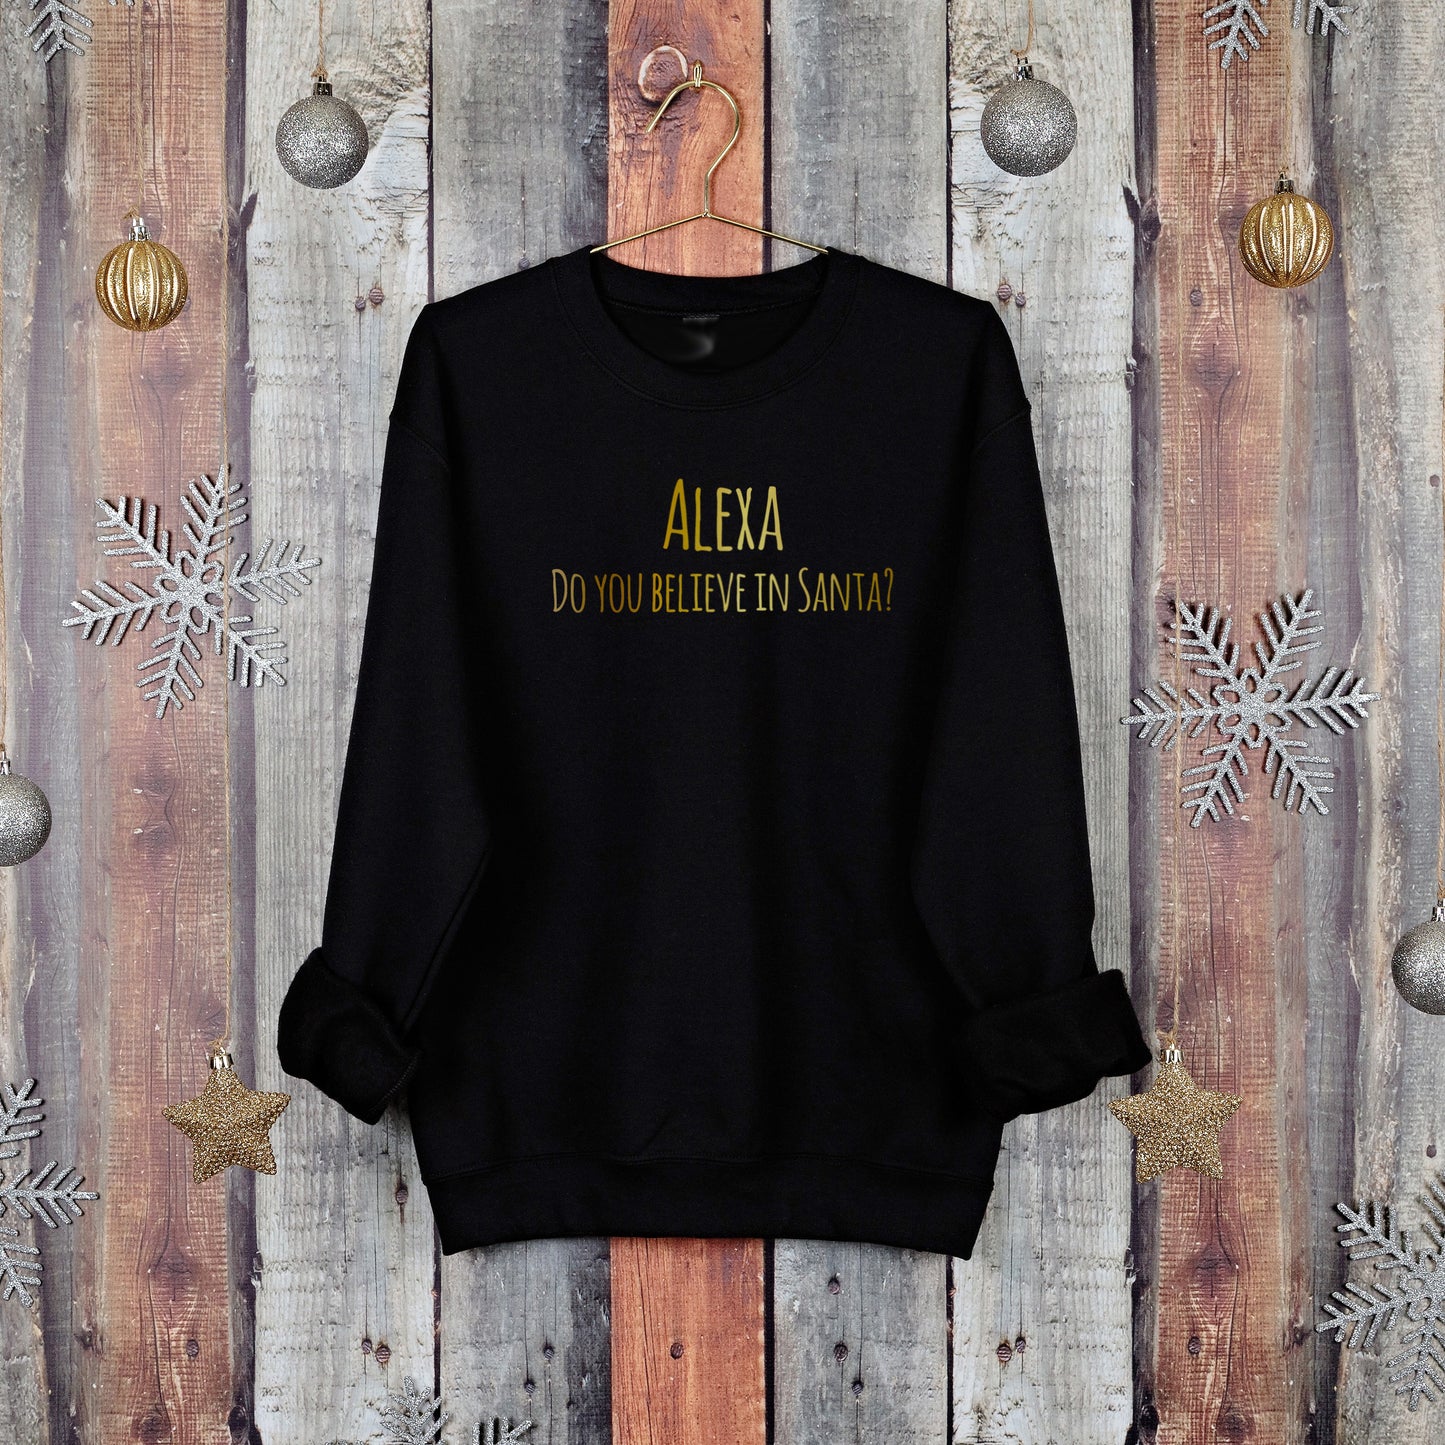 Alexa do you believe in Santa Christmas jumper alexa funny sweatshirt funny alexa slogan christmas sweatshirt